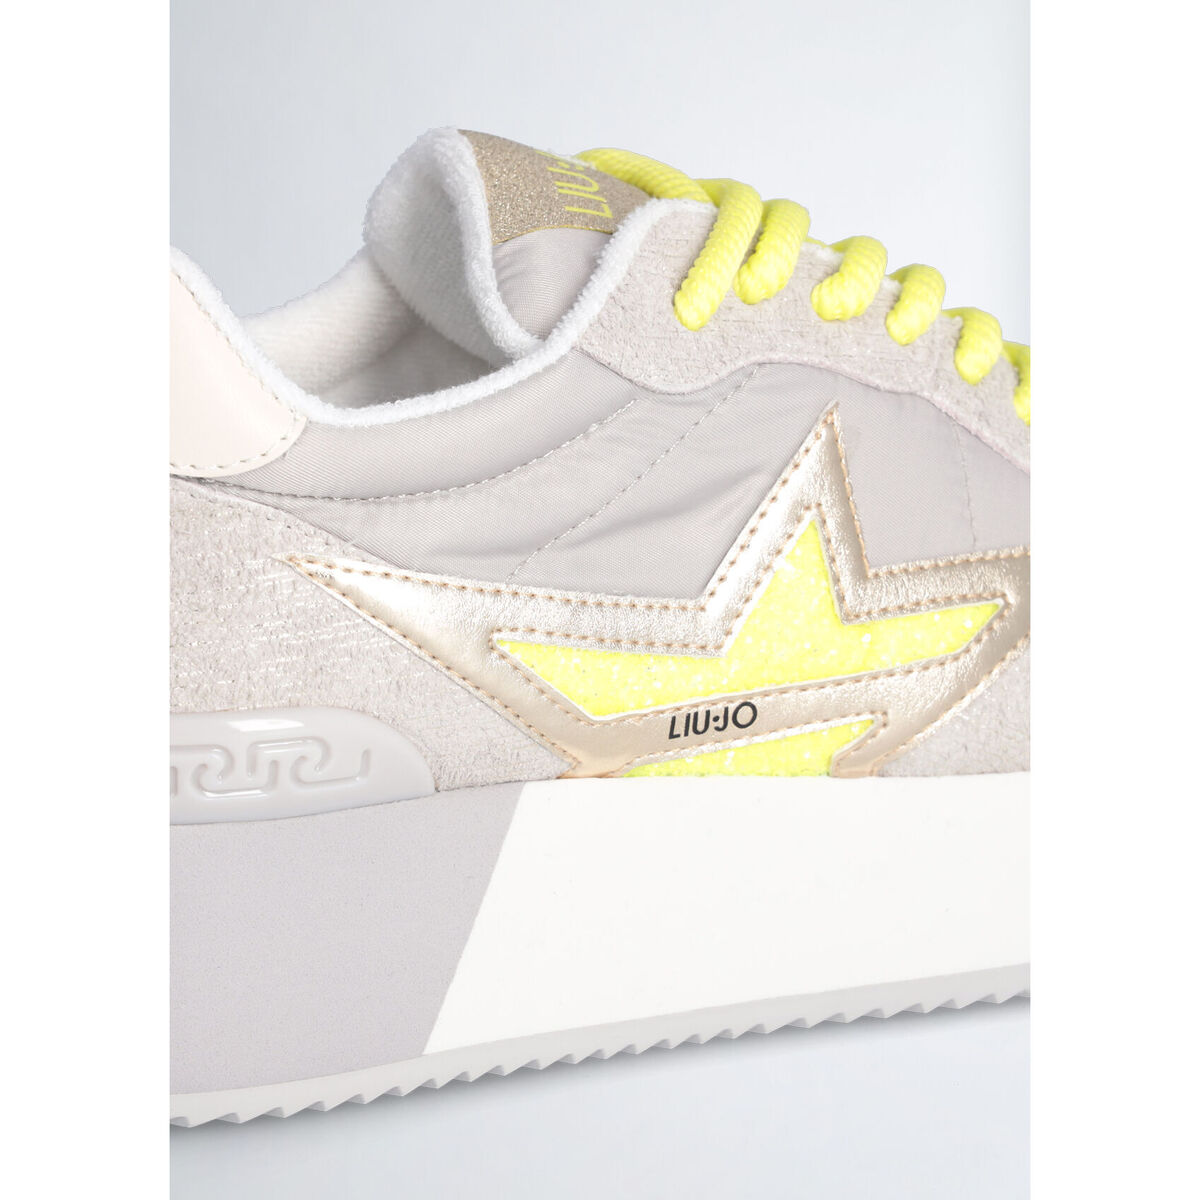 Liu Jo Gris Sneakers plateforme avec étoile glitter o6TWSvP4